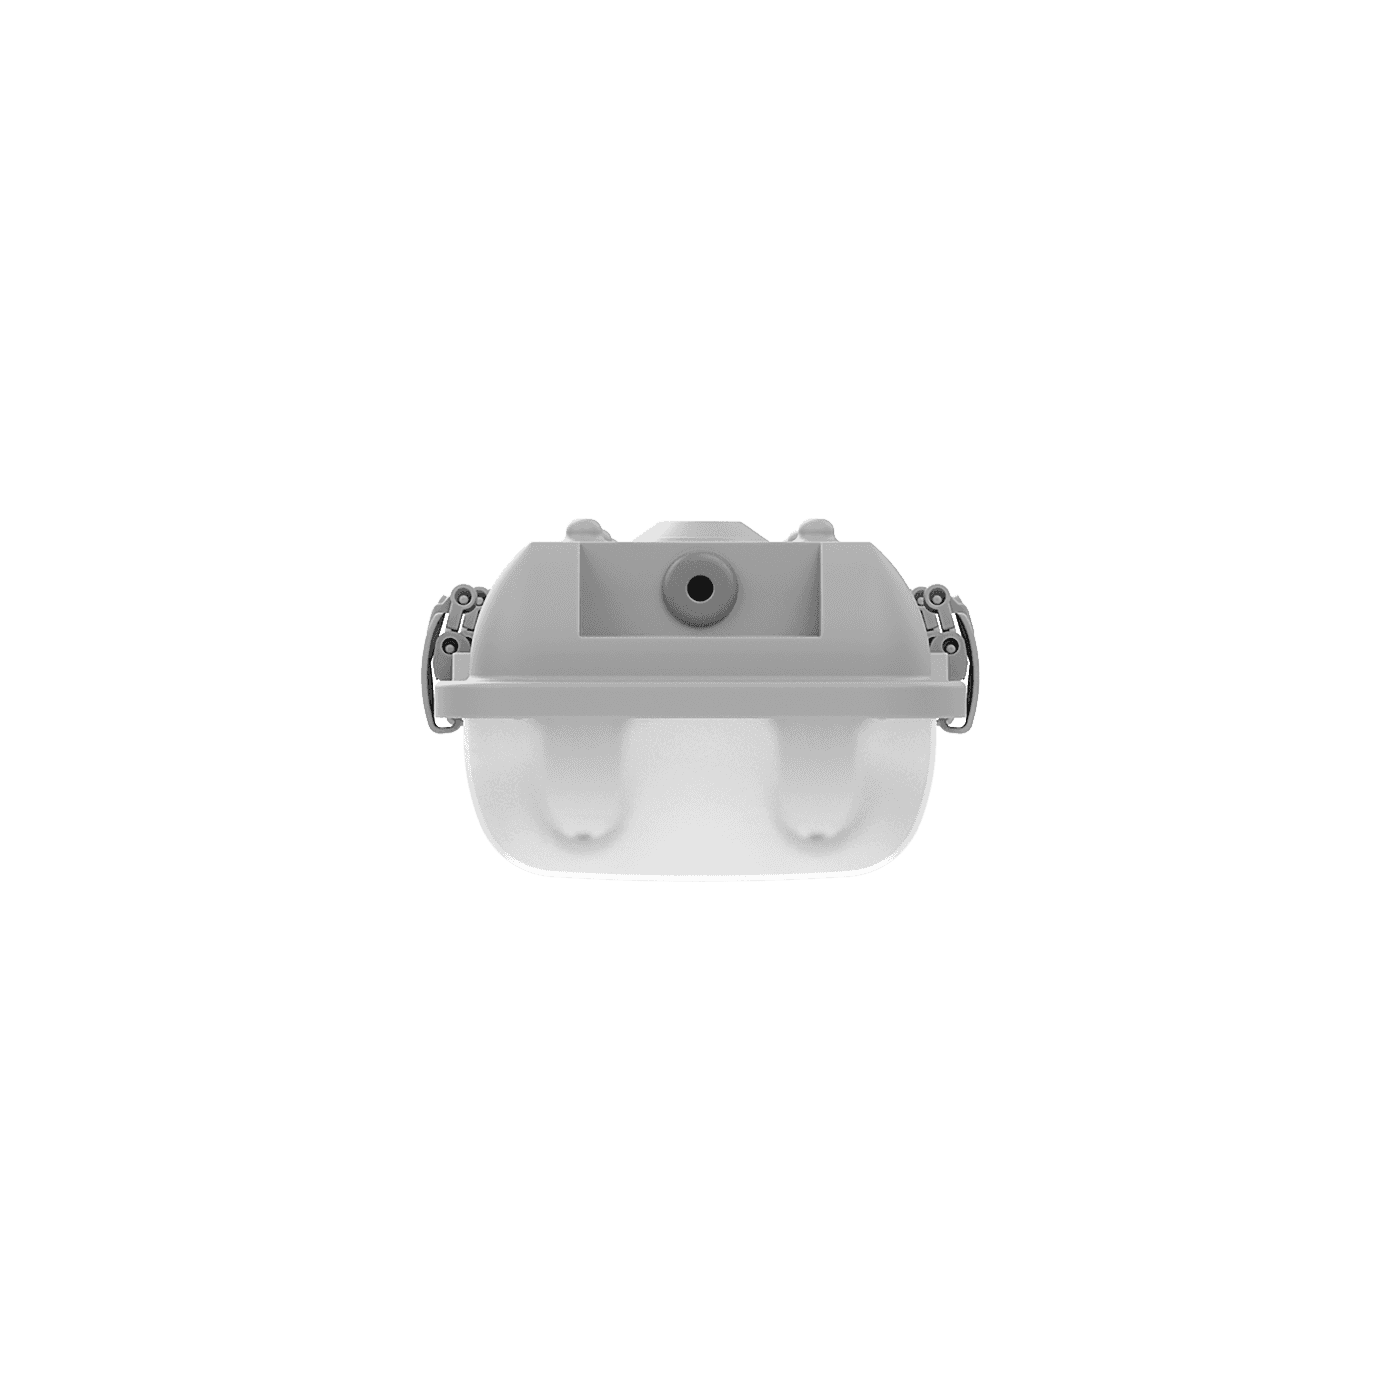 ламповые ARCTIC 236 (PC/SMC) HF, артикул 1069000530